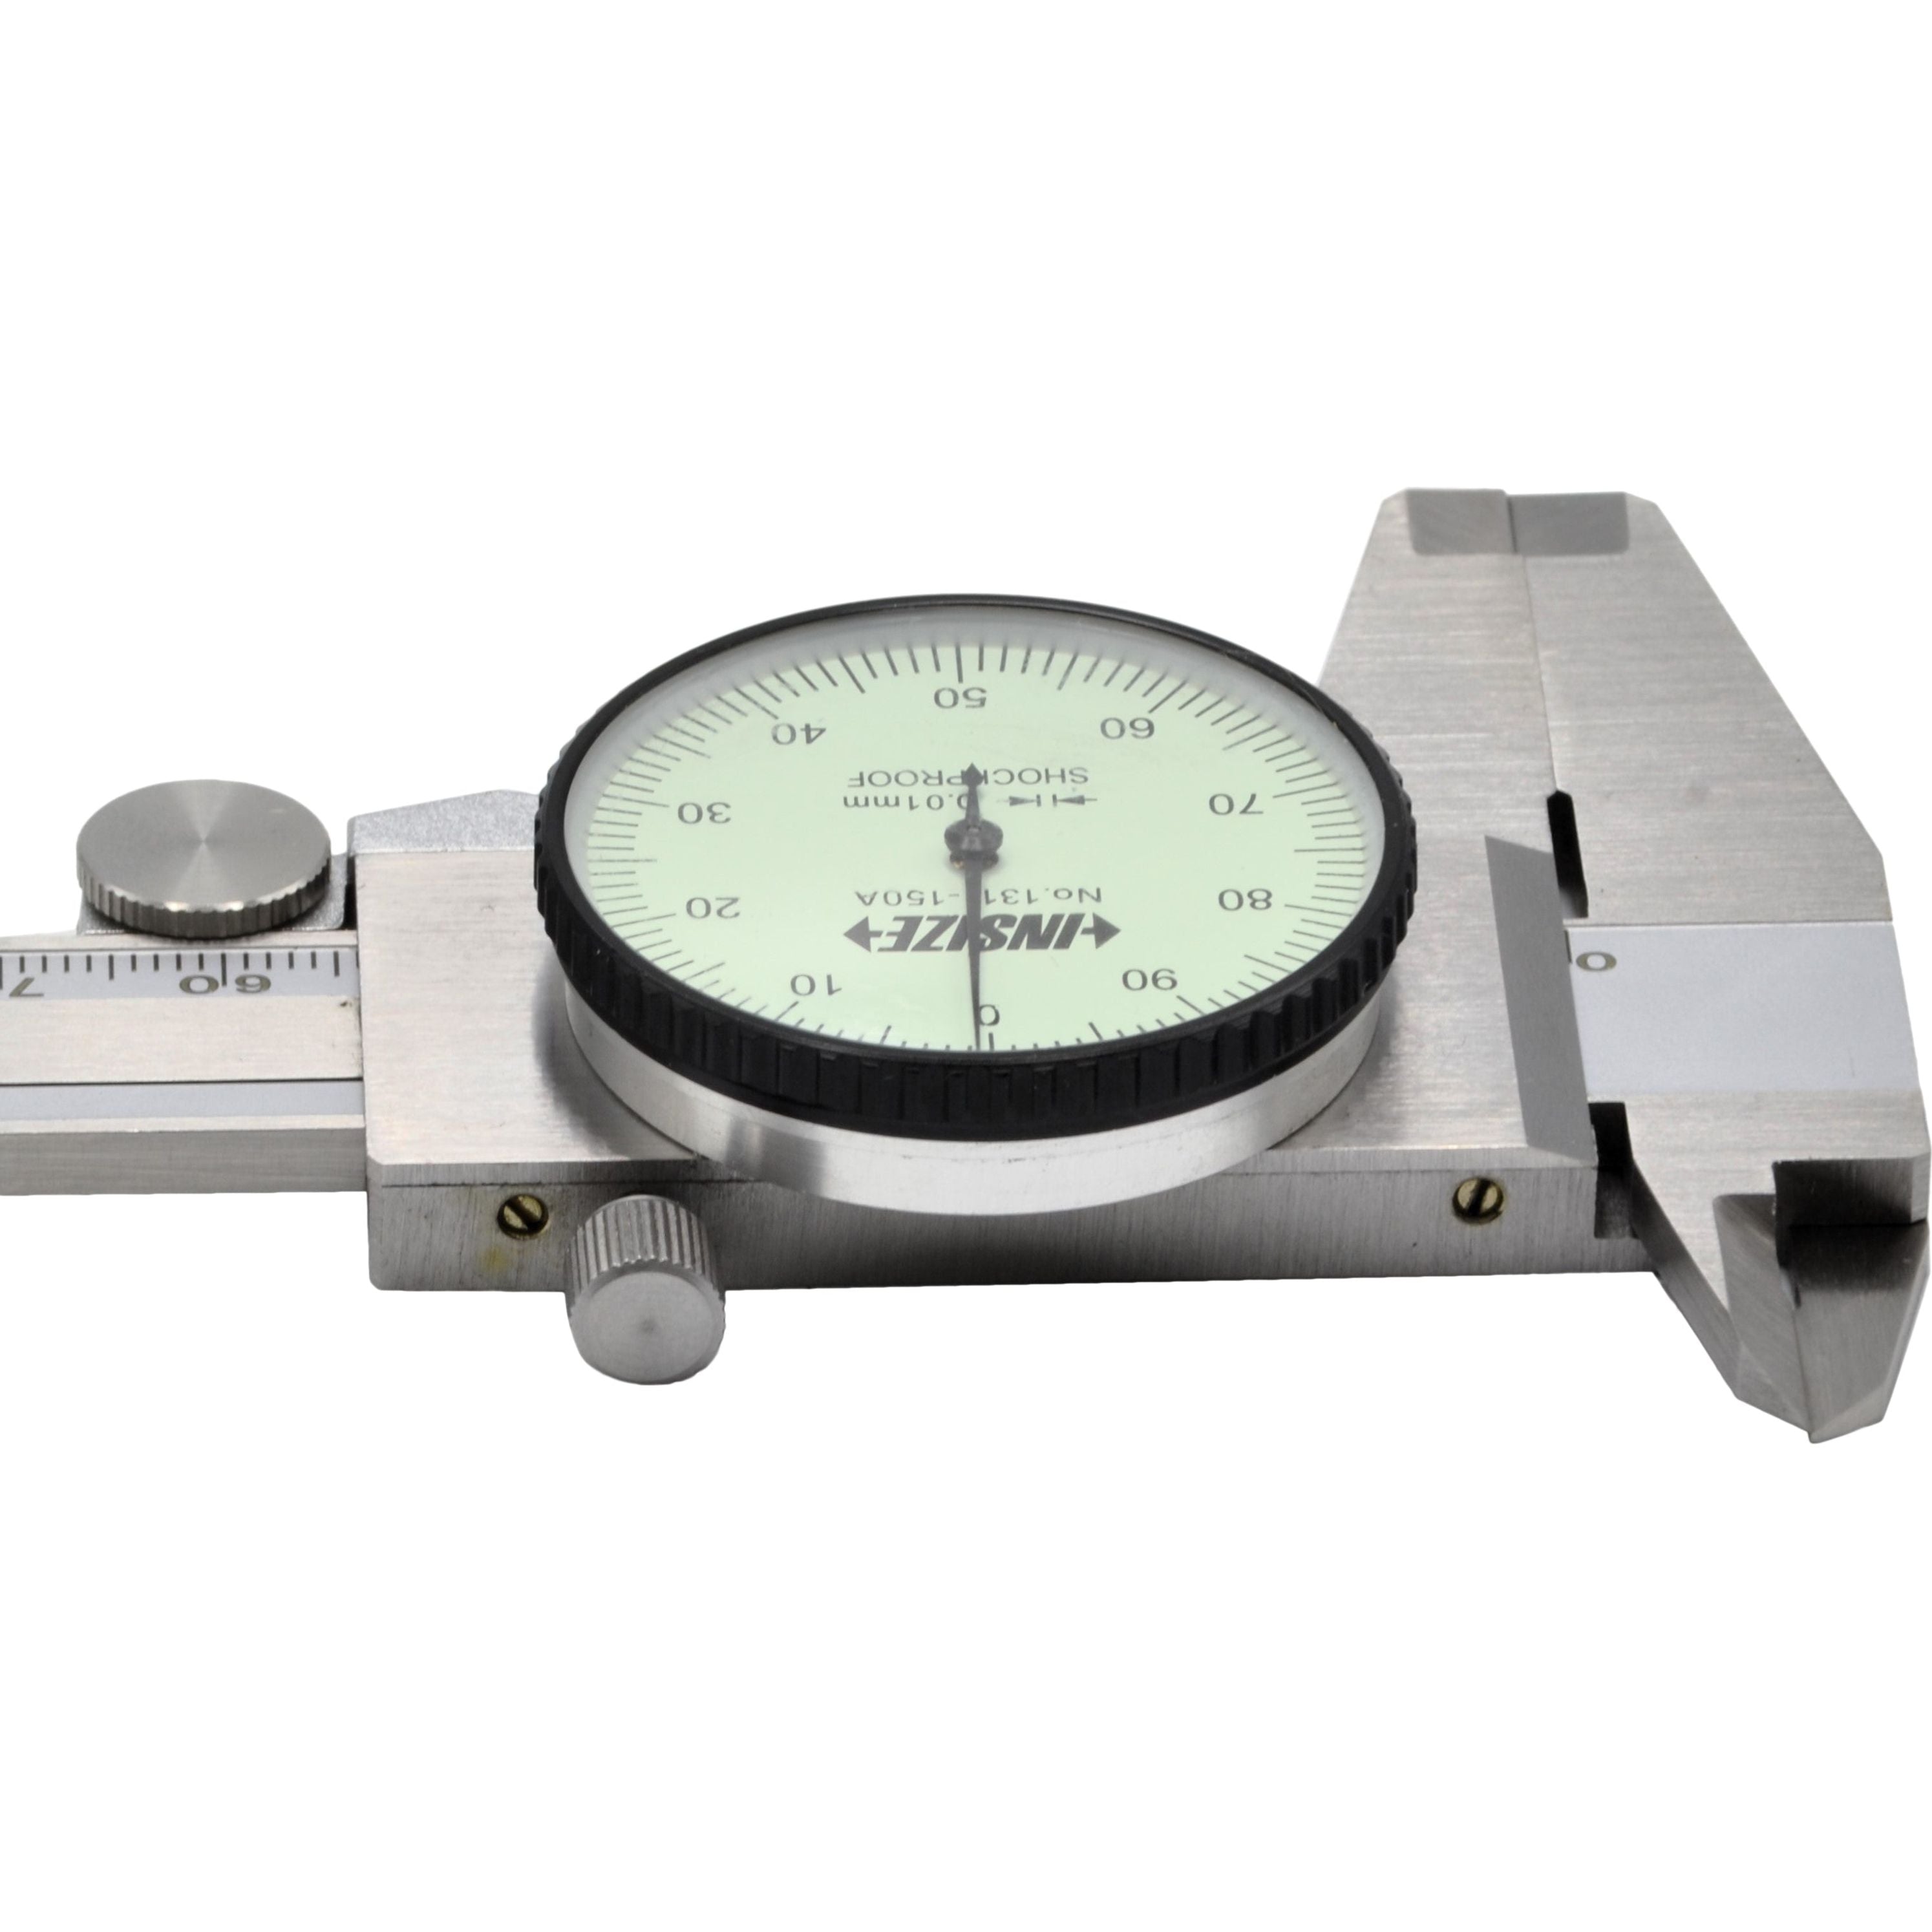 INSIZE Metric Dial Caliper  0-150mm Range Series 1311-150A